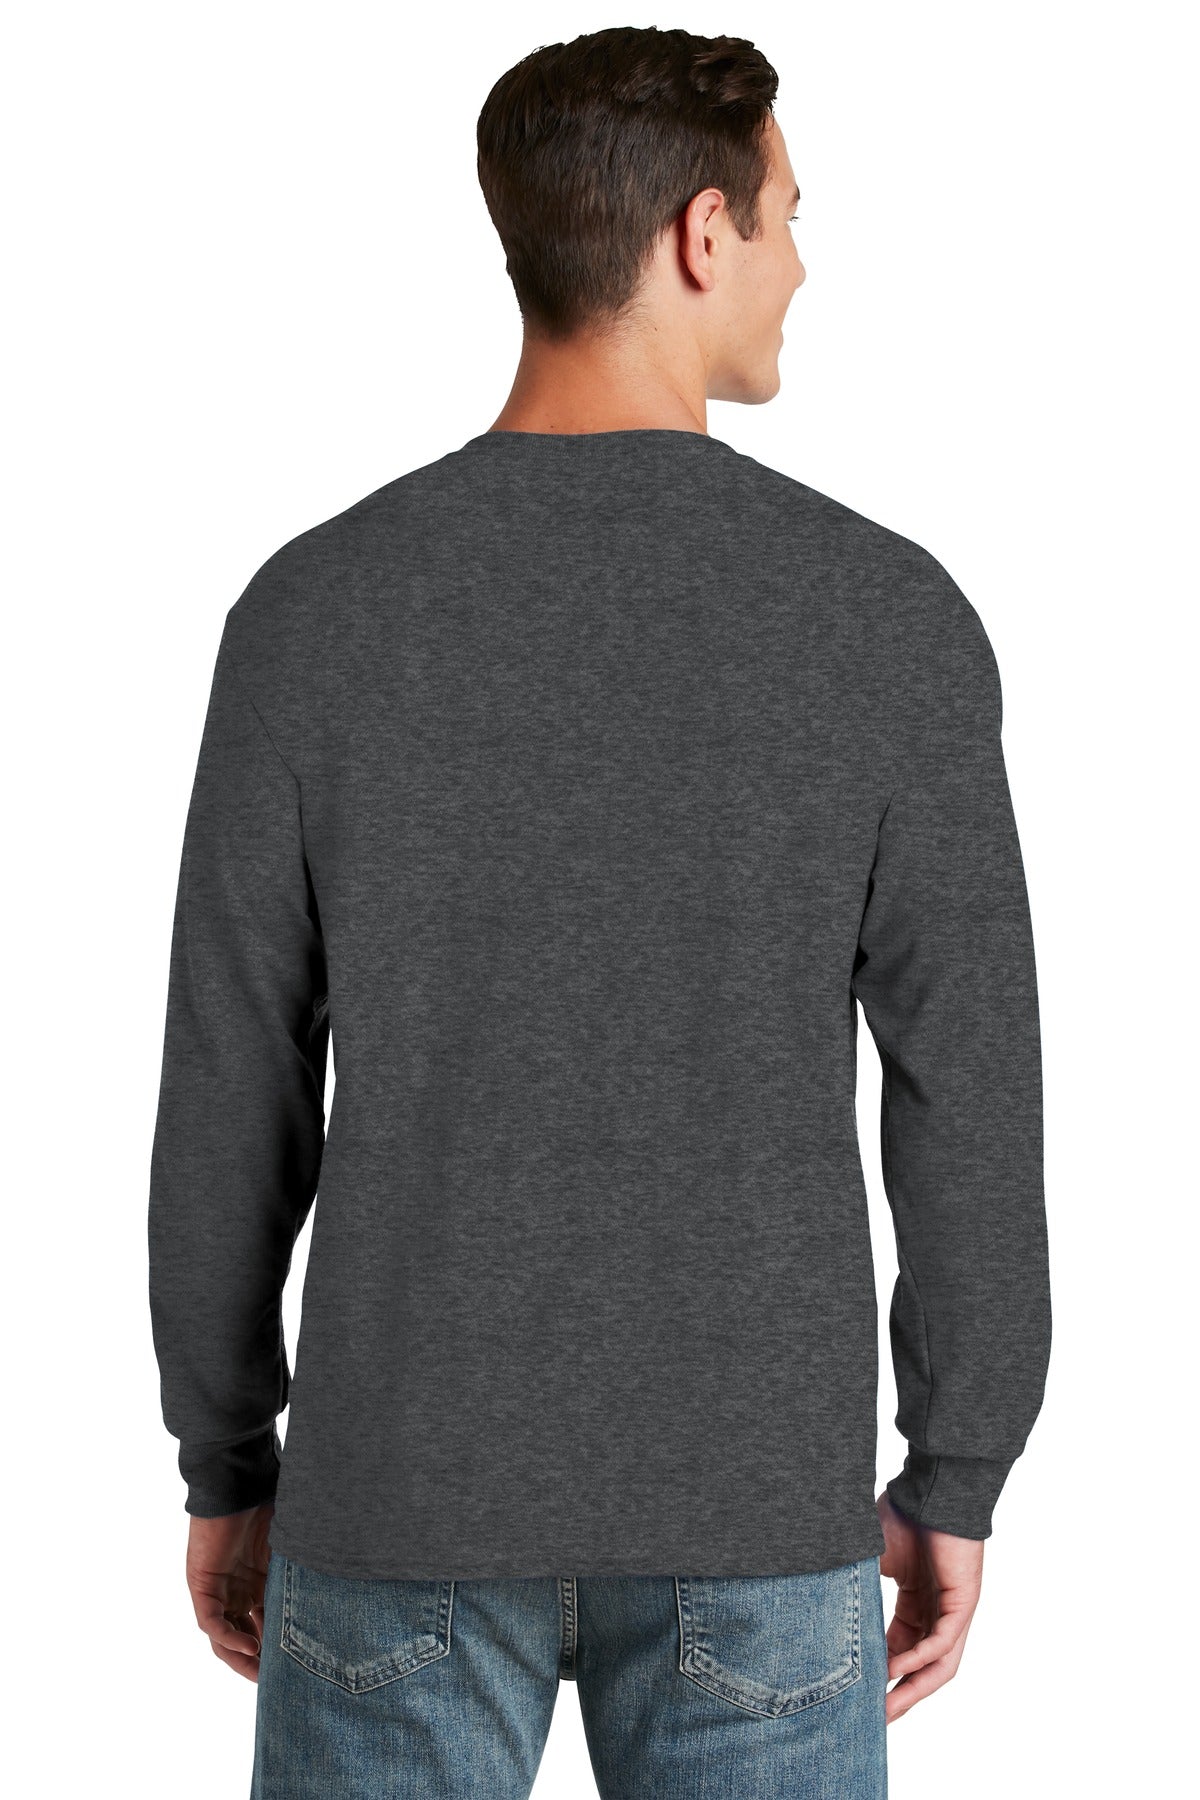 Jerzees - Dri-Power 50/50 Cotton/Poly Long Sleeve T-Shirt. 29LS